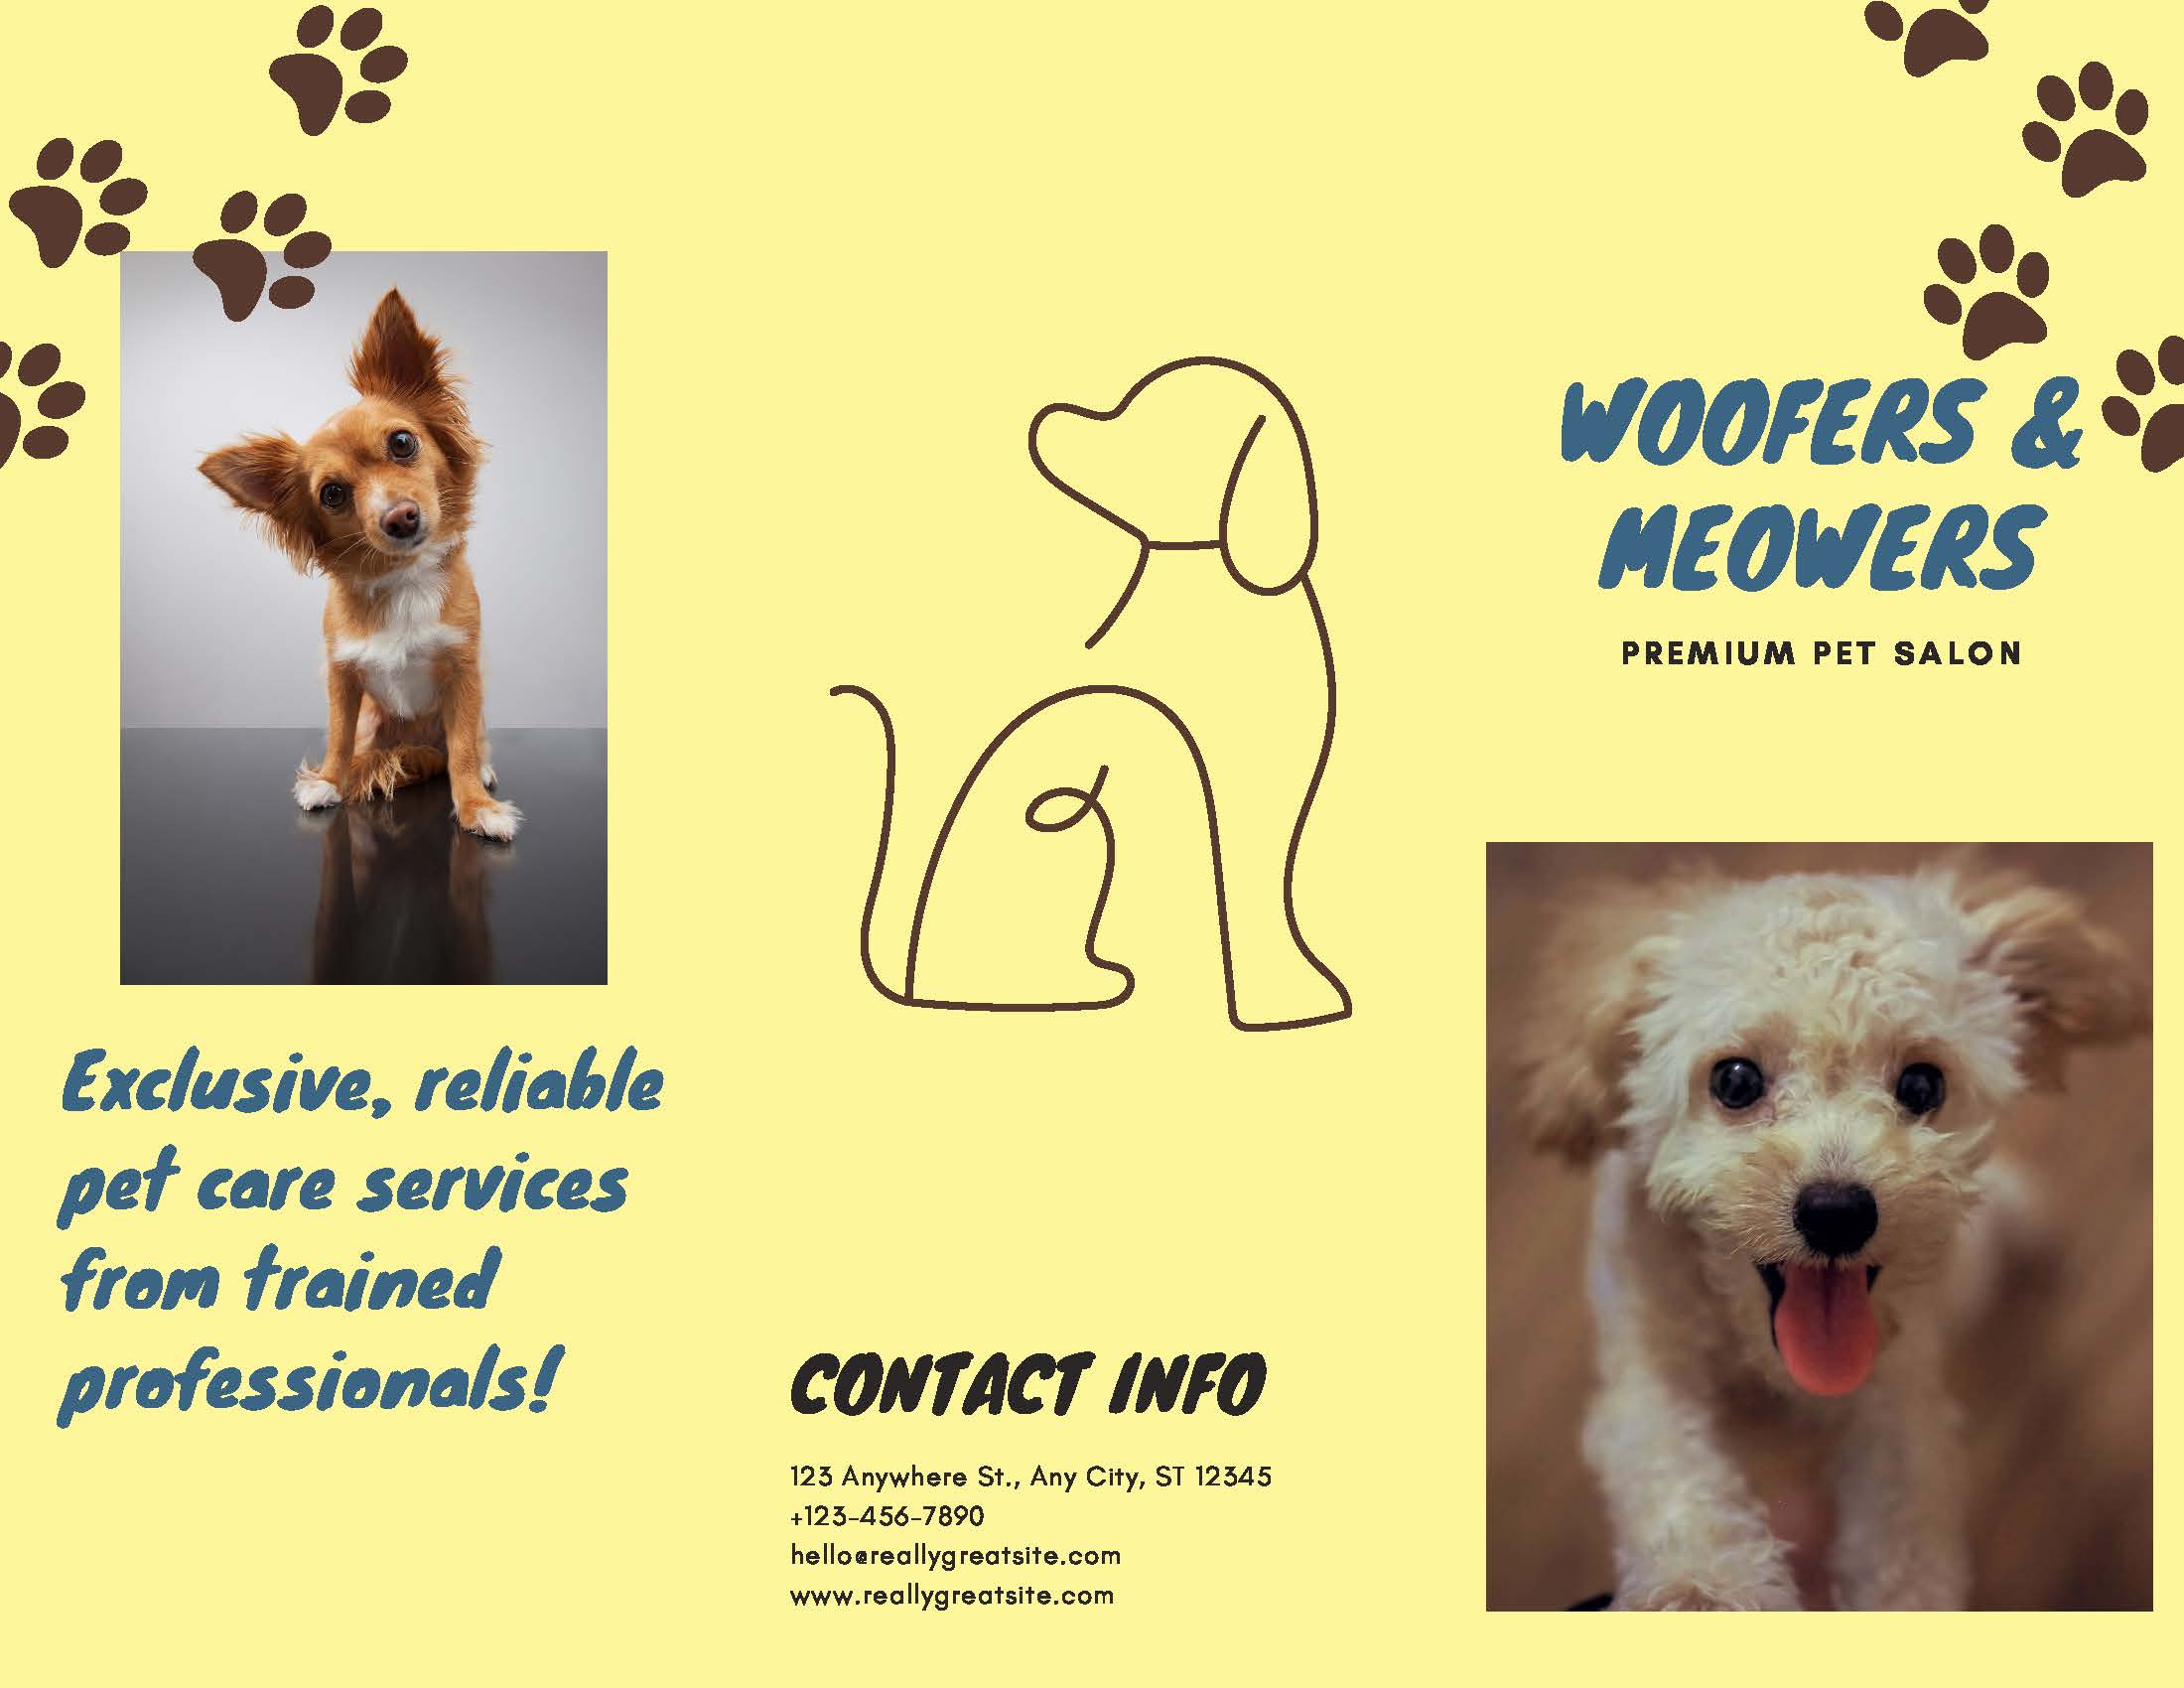 Pet grooming business example brochure